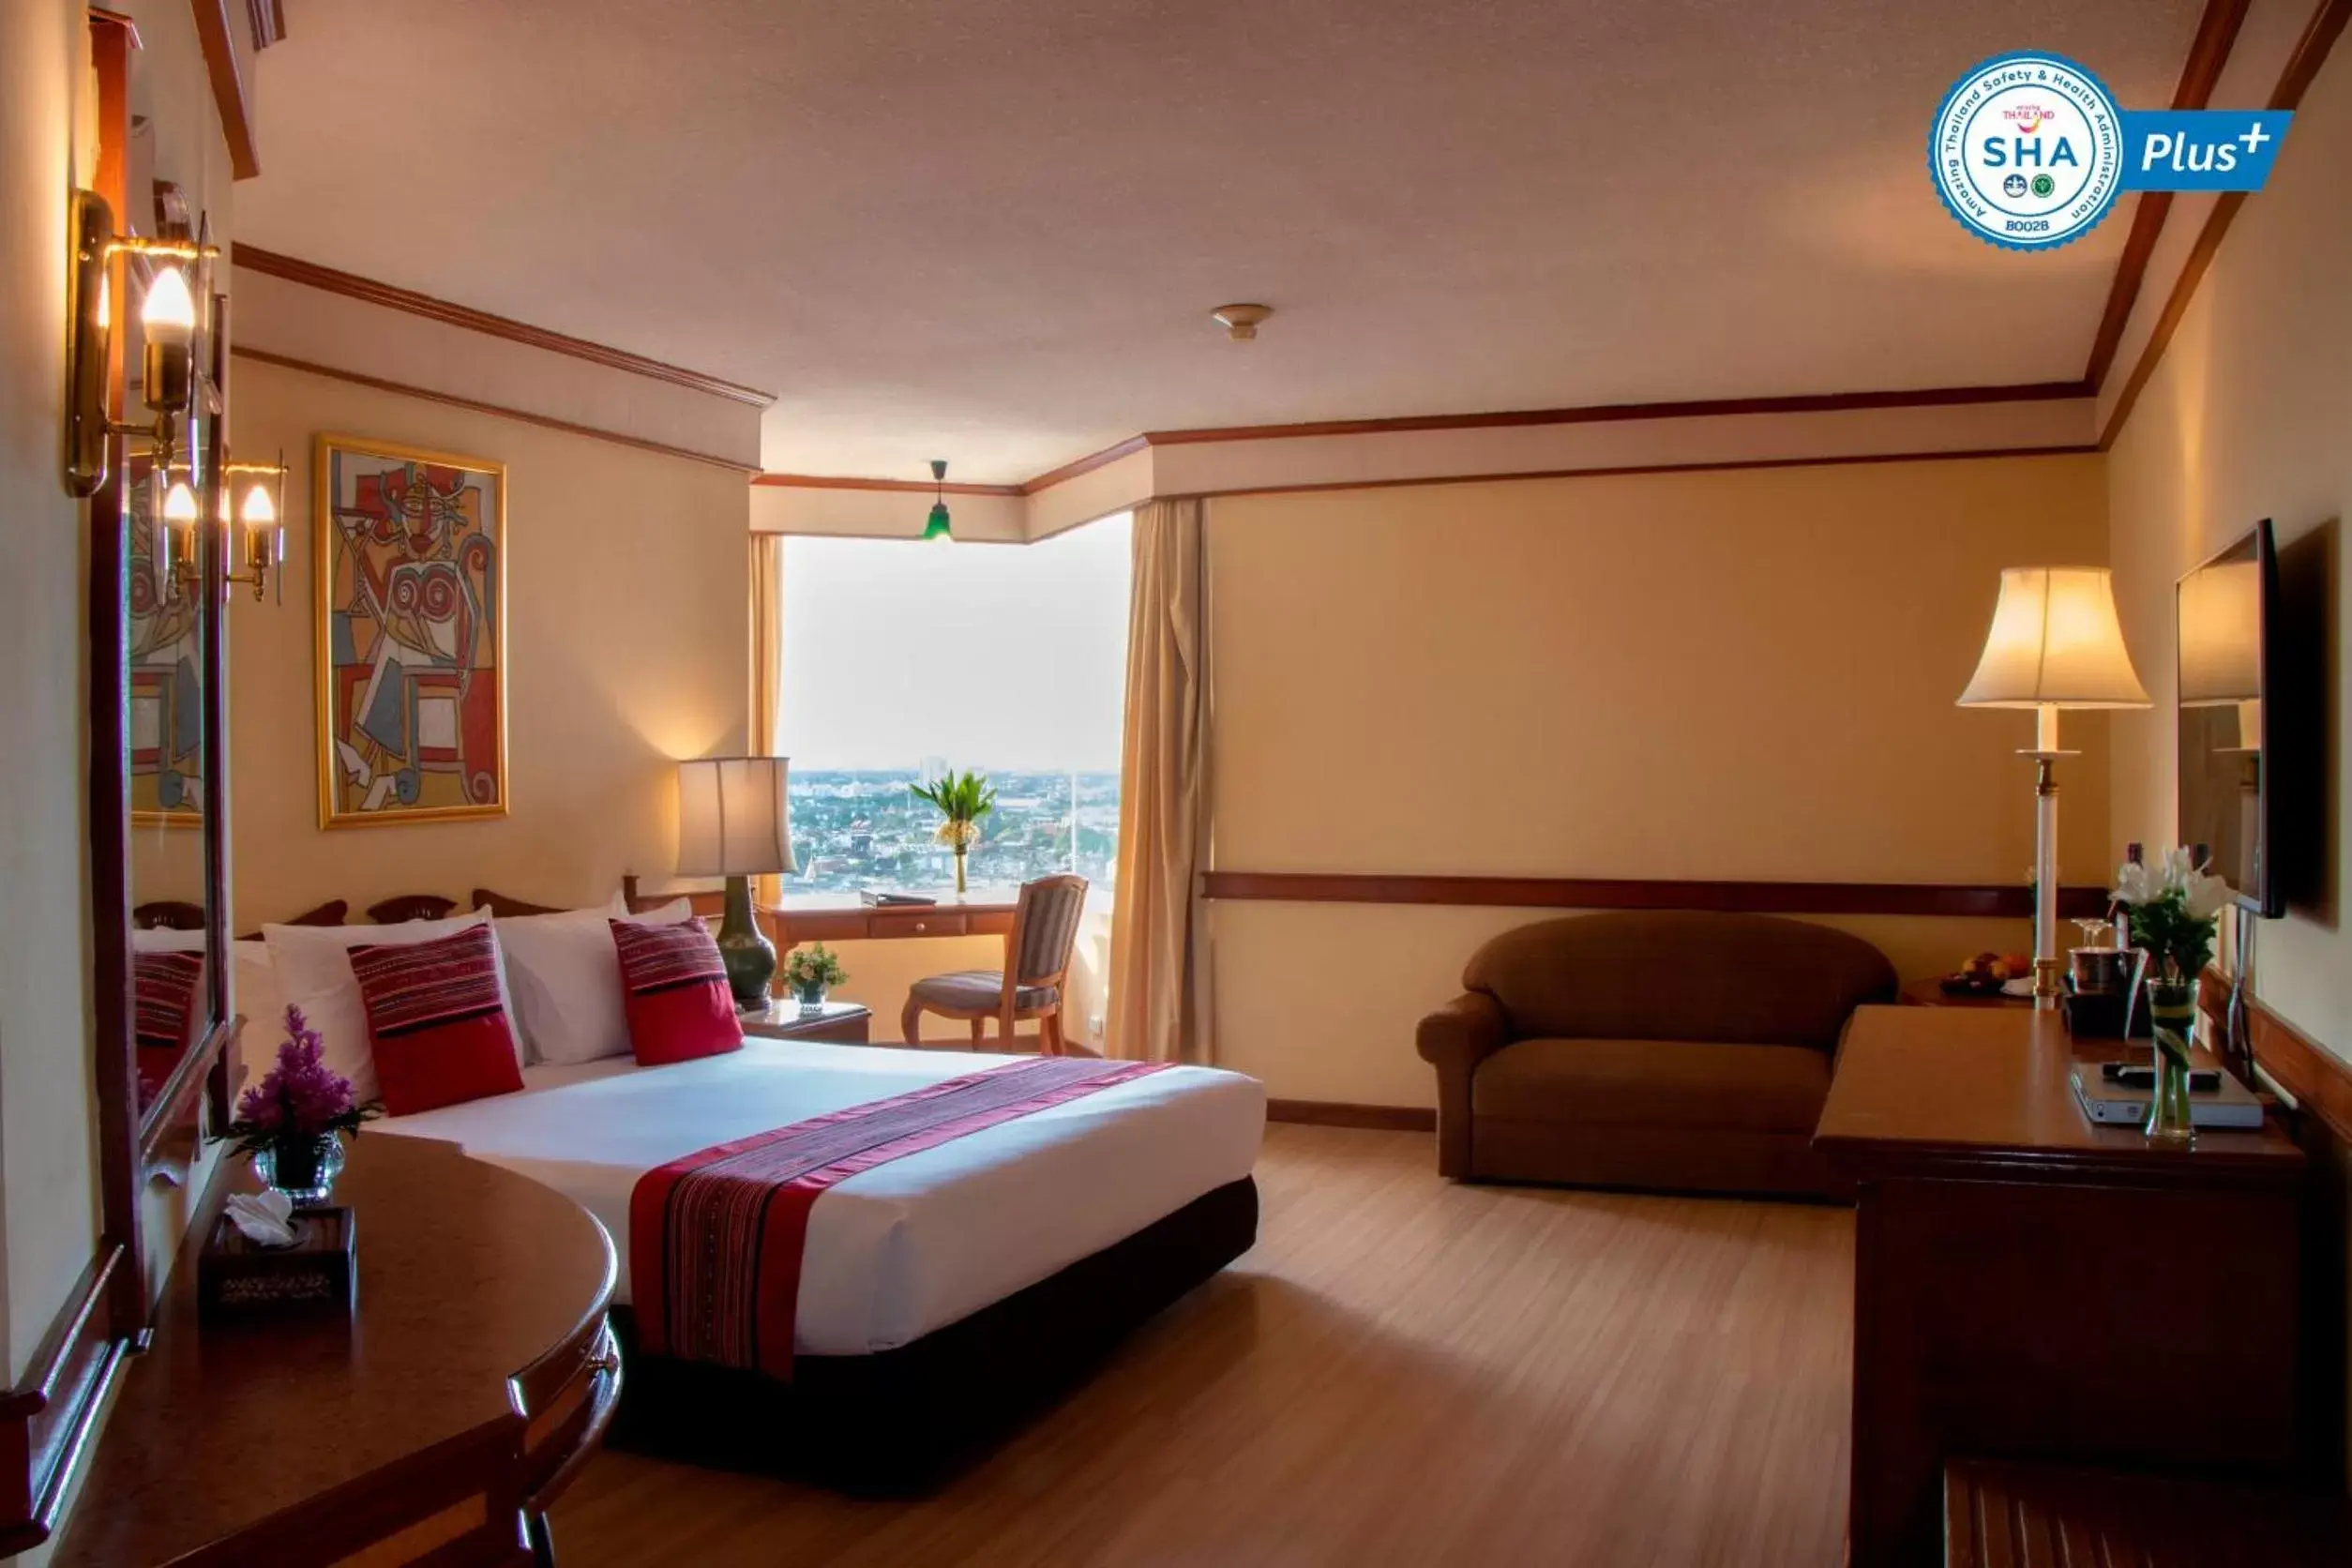 Bedroom in Duangtawan Hotel Chiang Mai -SHA Extra Plus